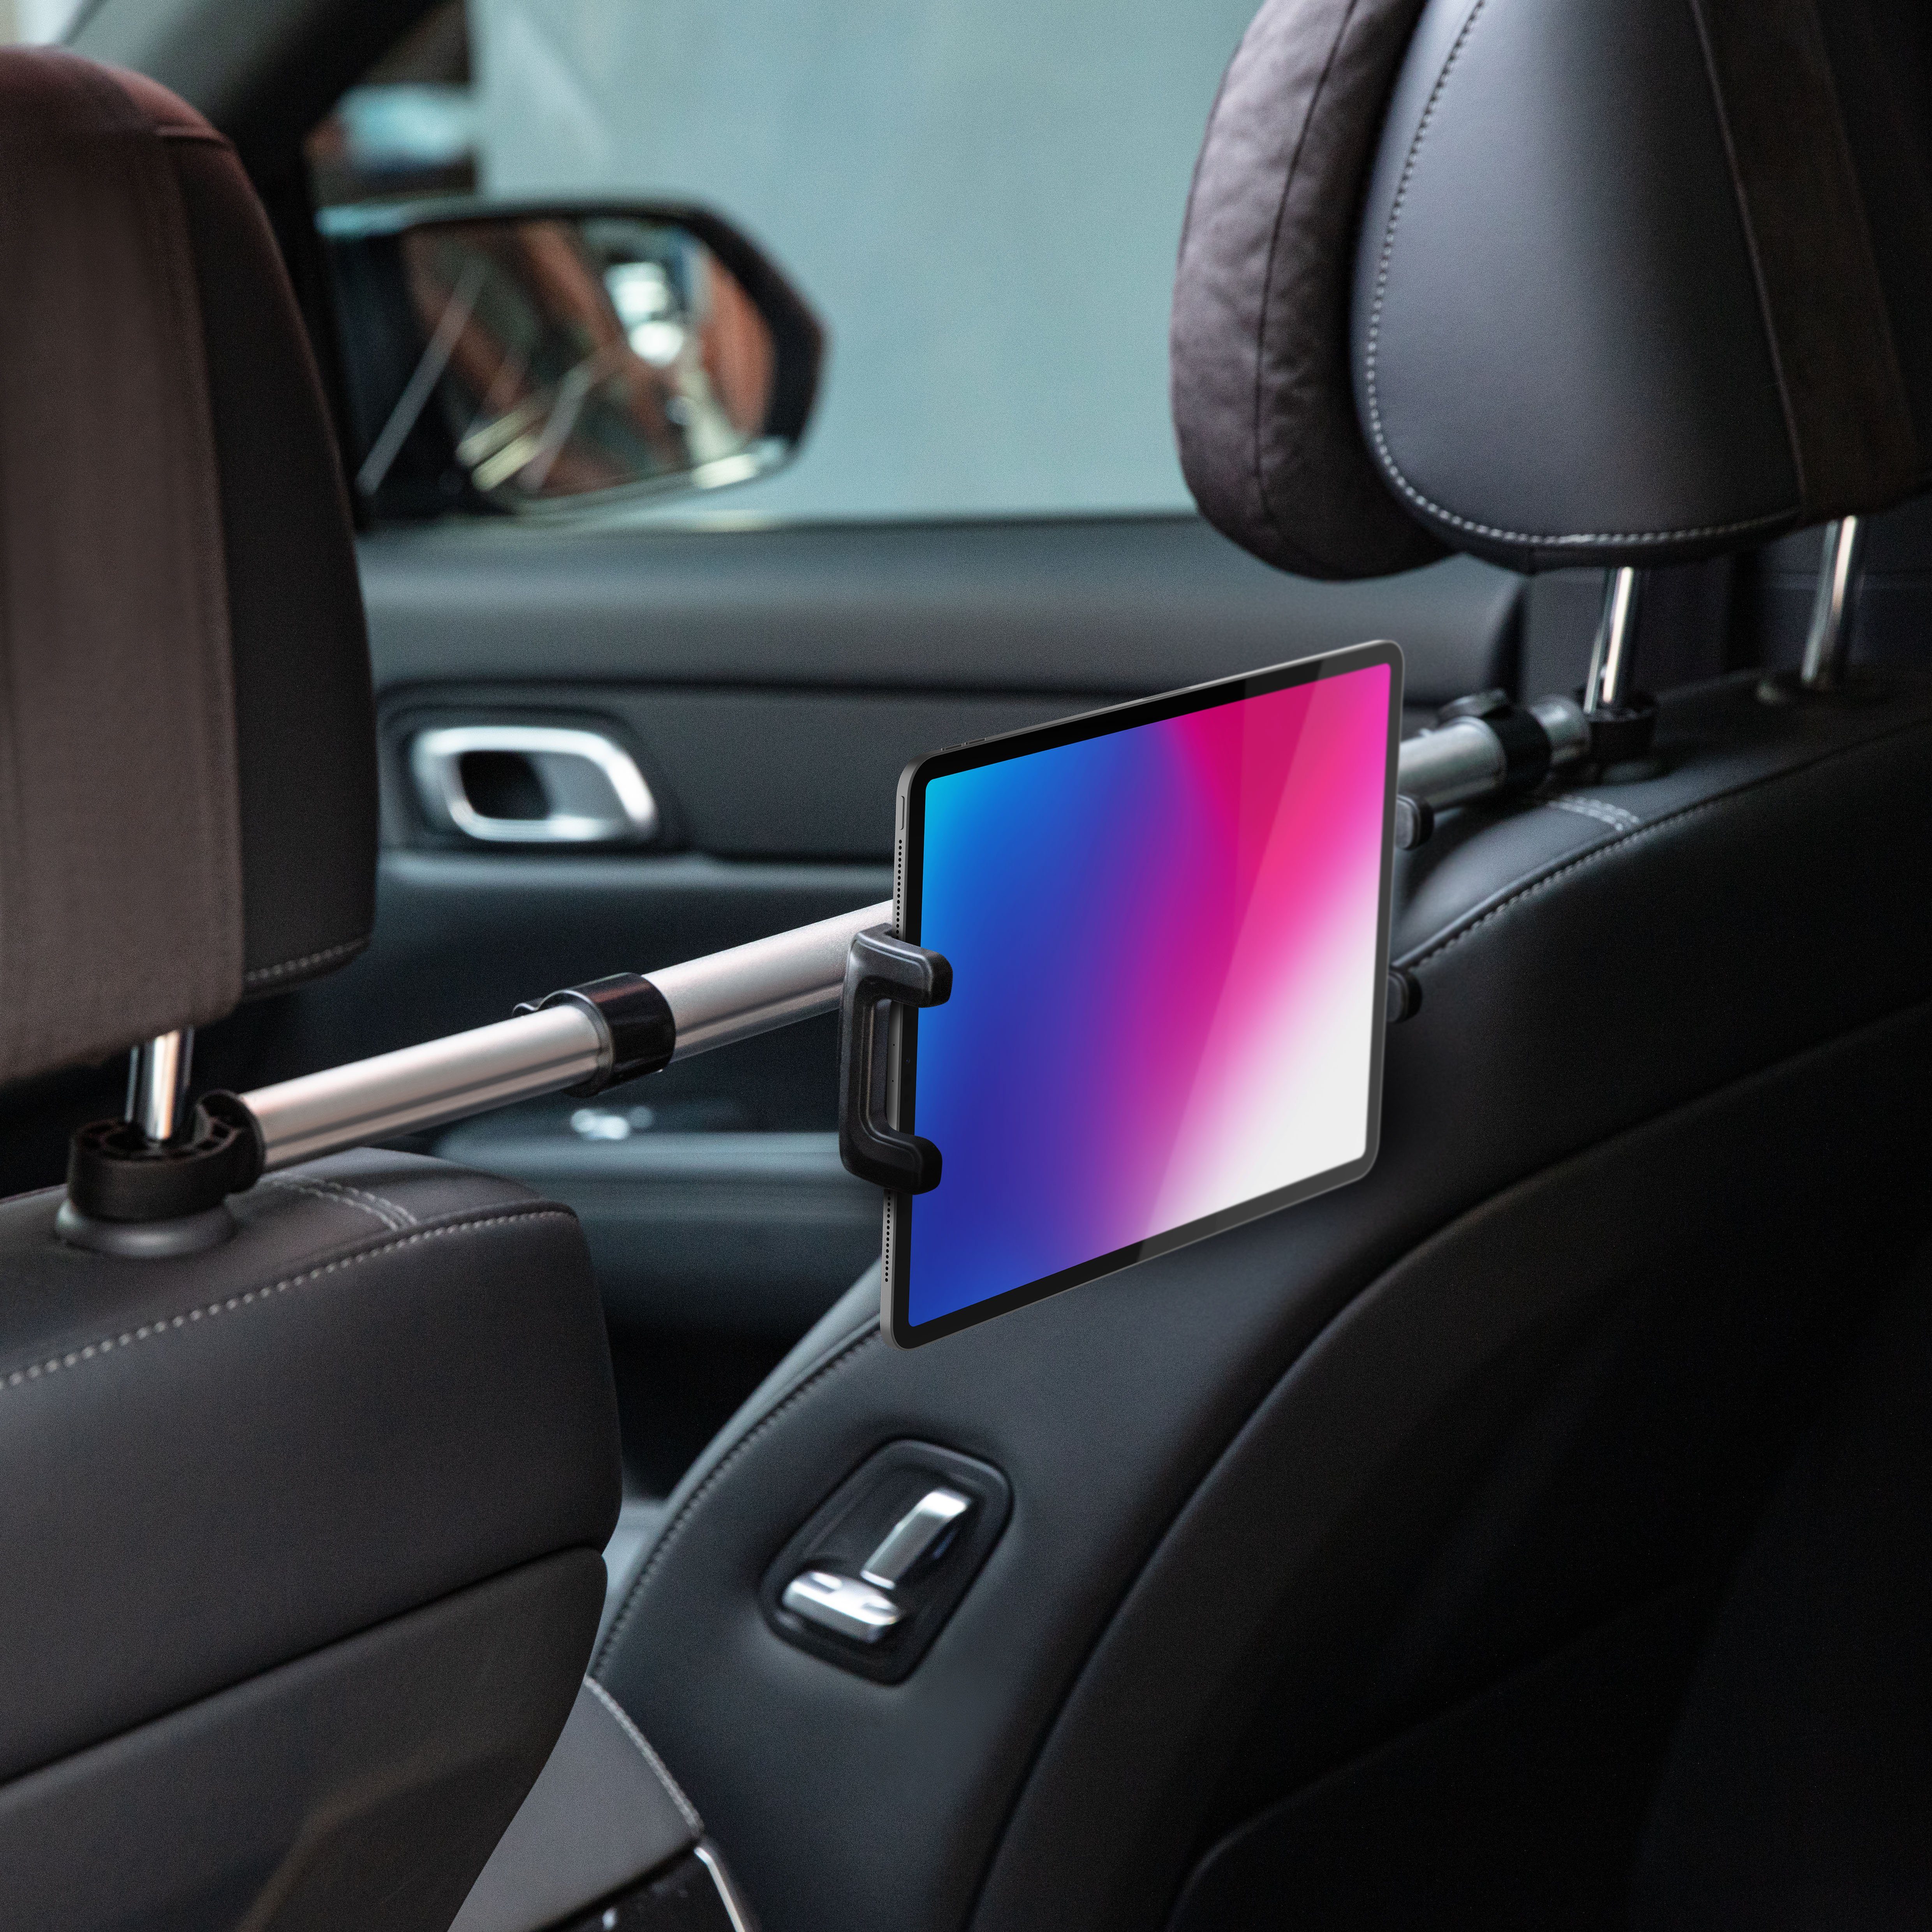 Universal Auto Rücksitz Halter Kopfstütze Halterung KFZ PKW für Tablet PC  iPad